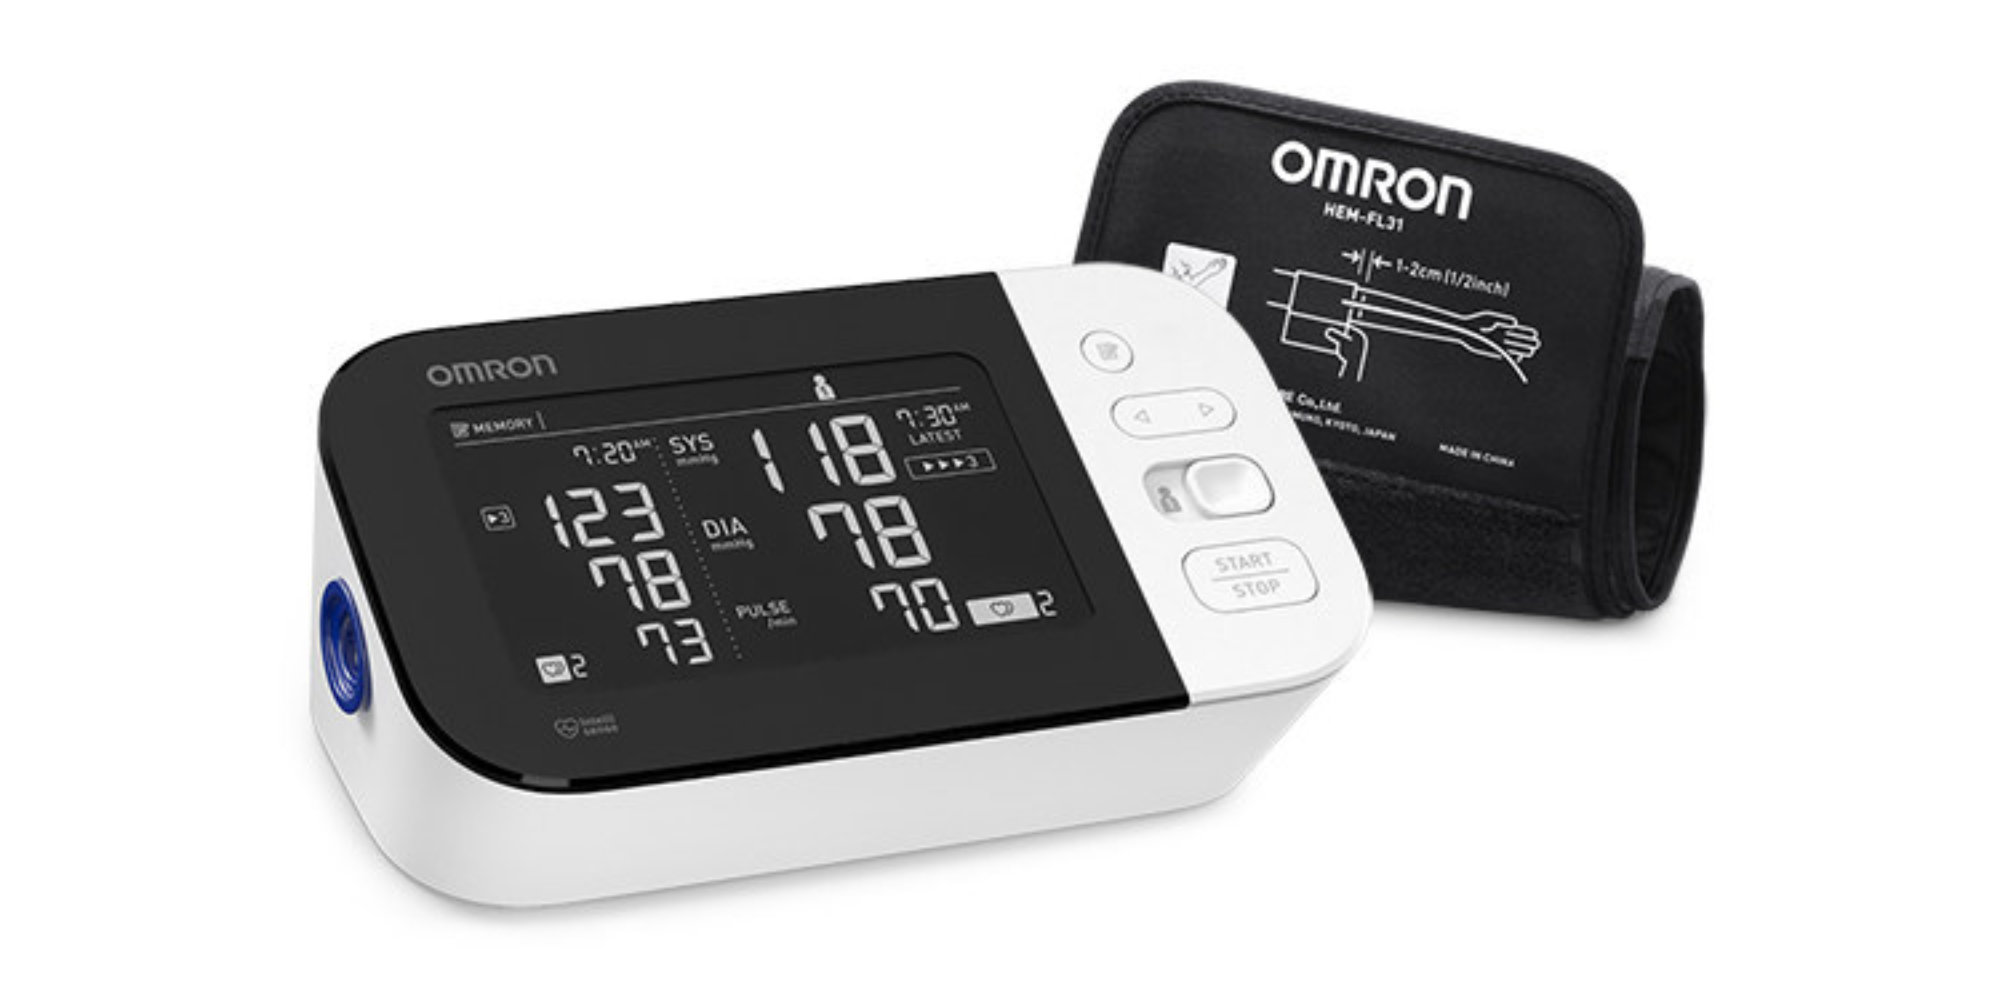 Omron blood pressure monitor walmart